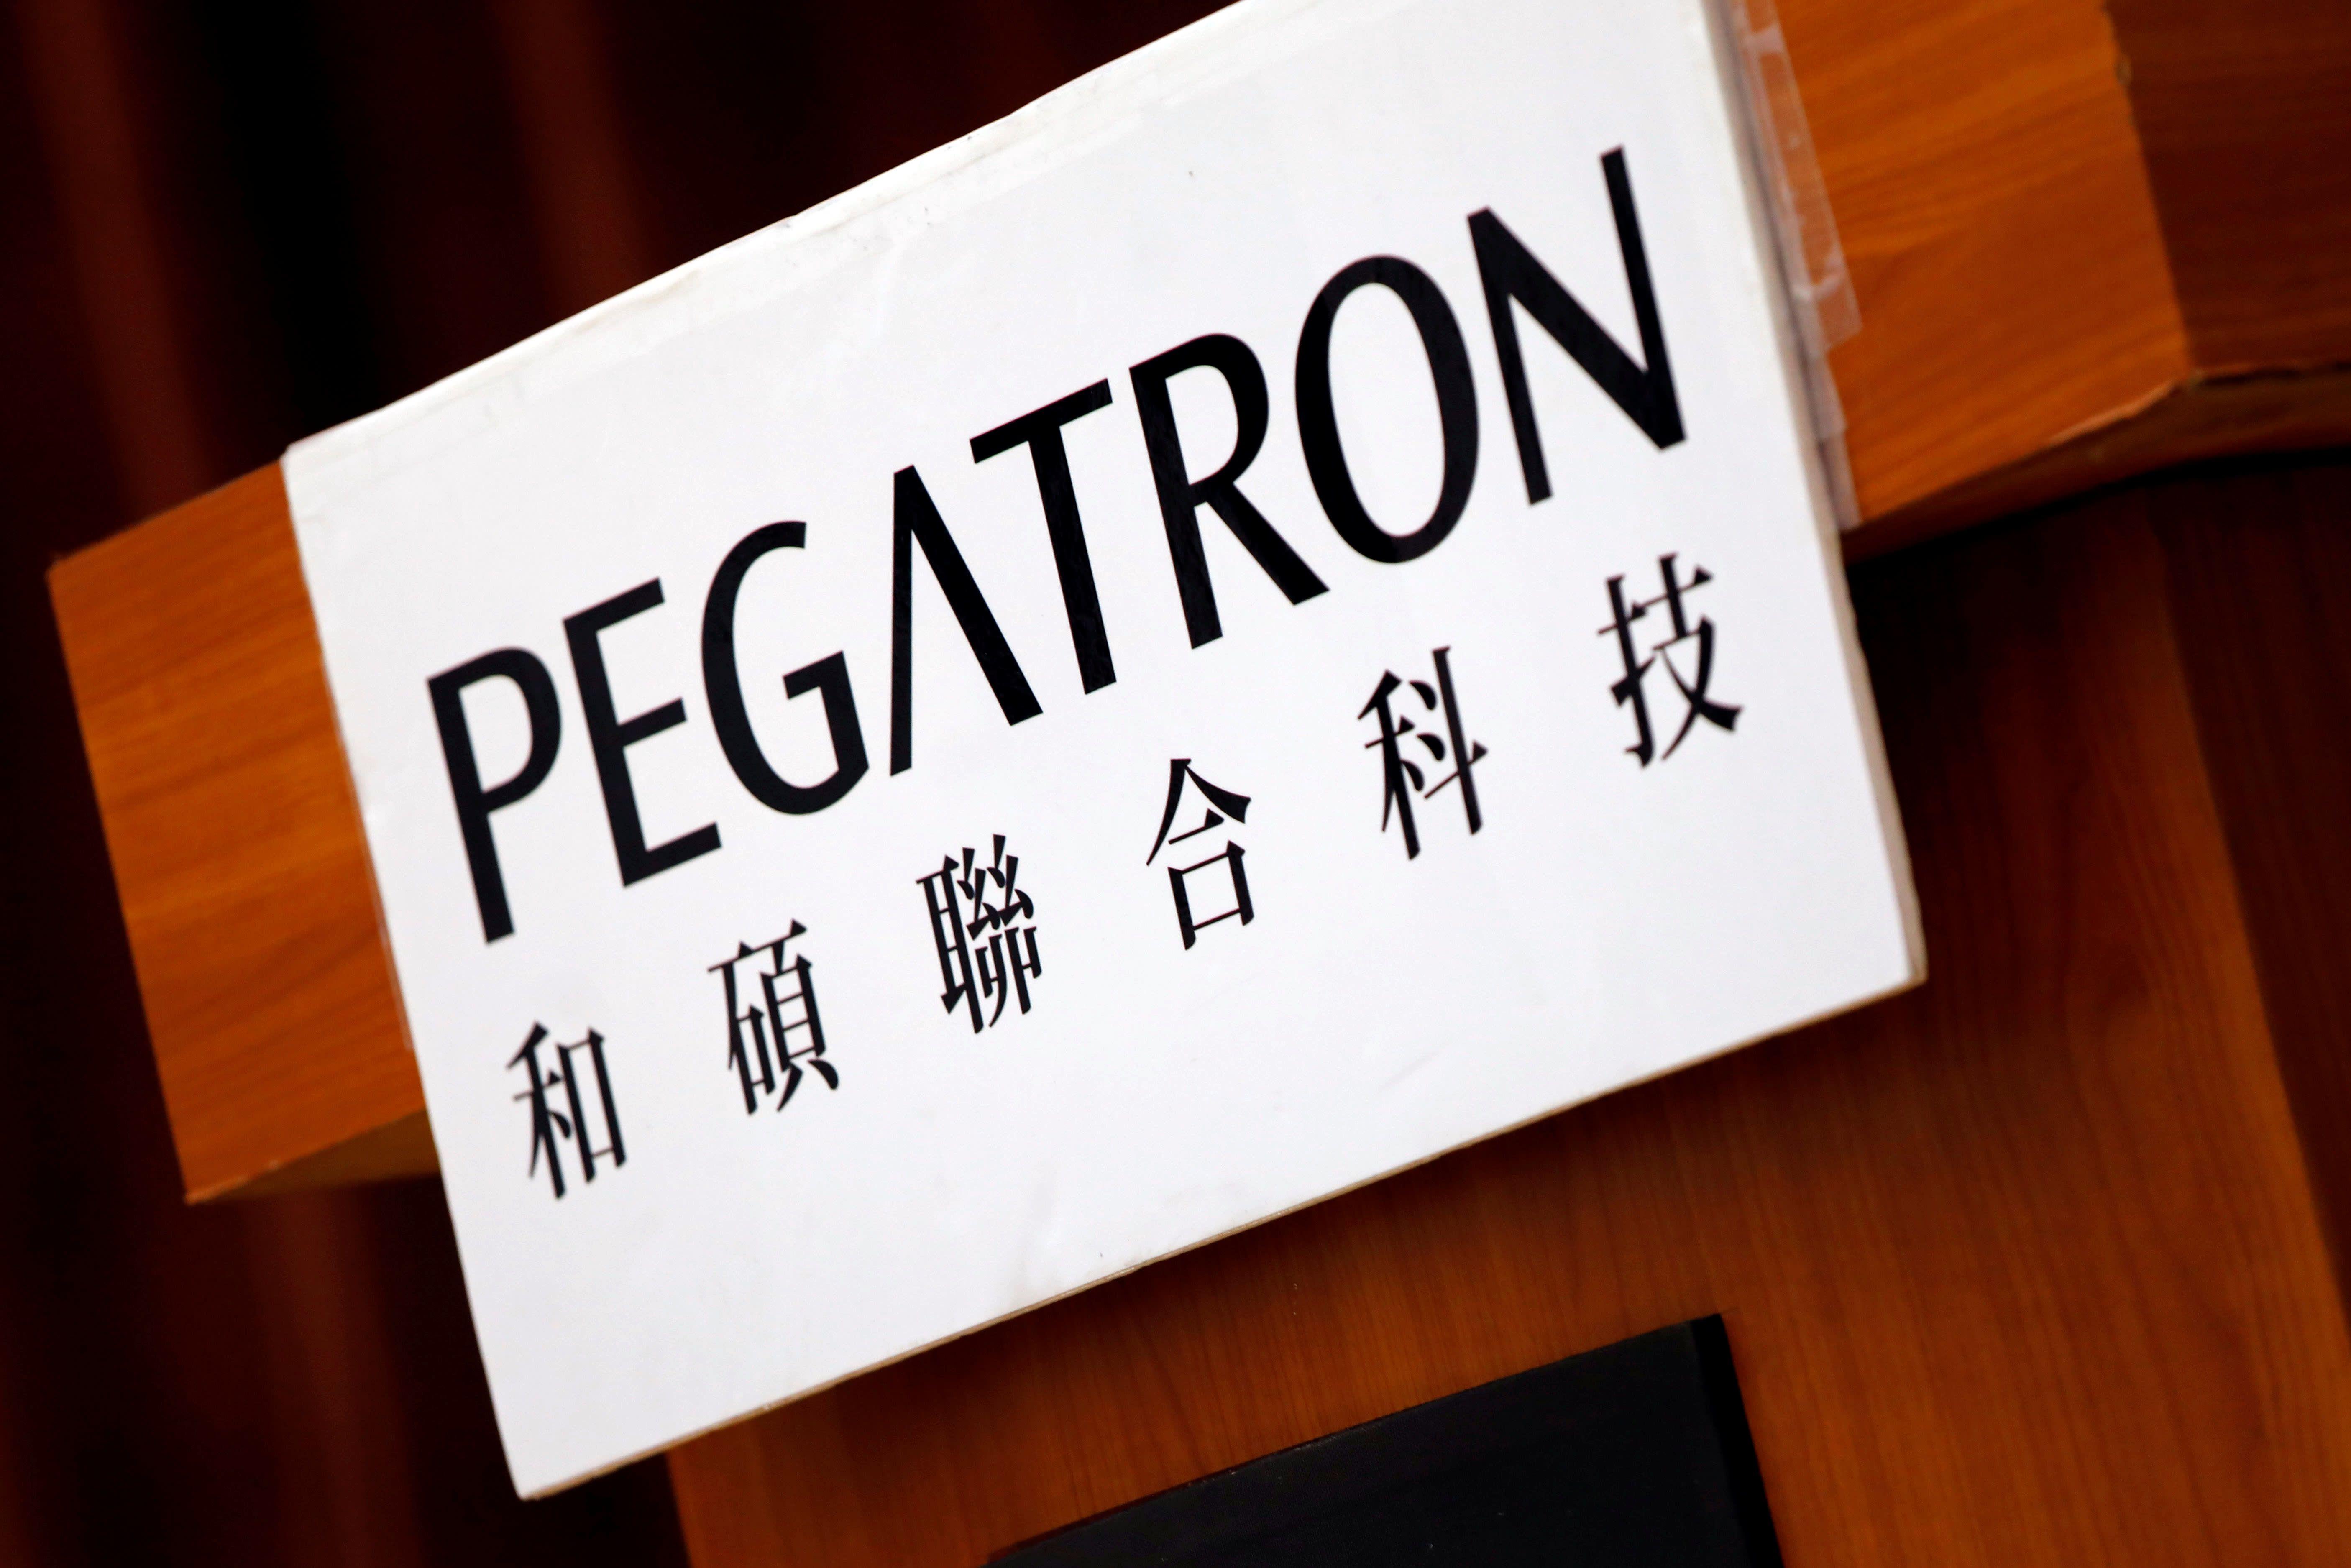 Pegatron Logo - Apple supplier Pegatron upbeat on premium phone market for 2018